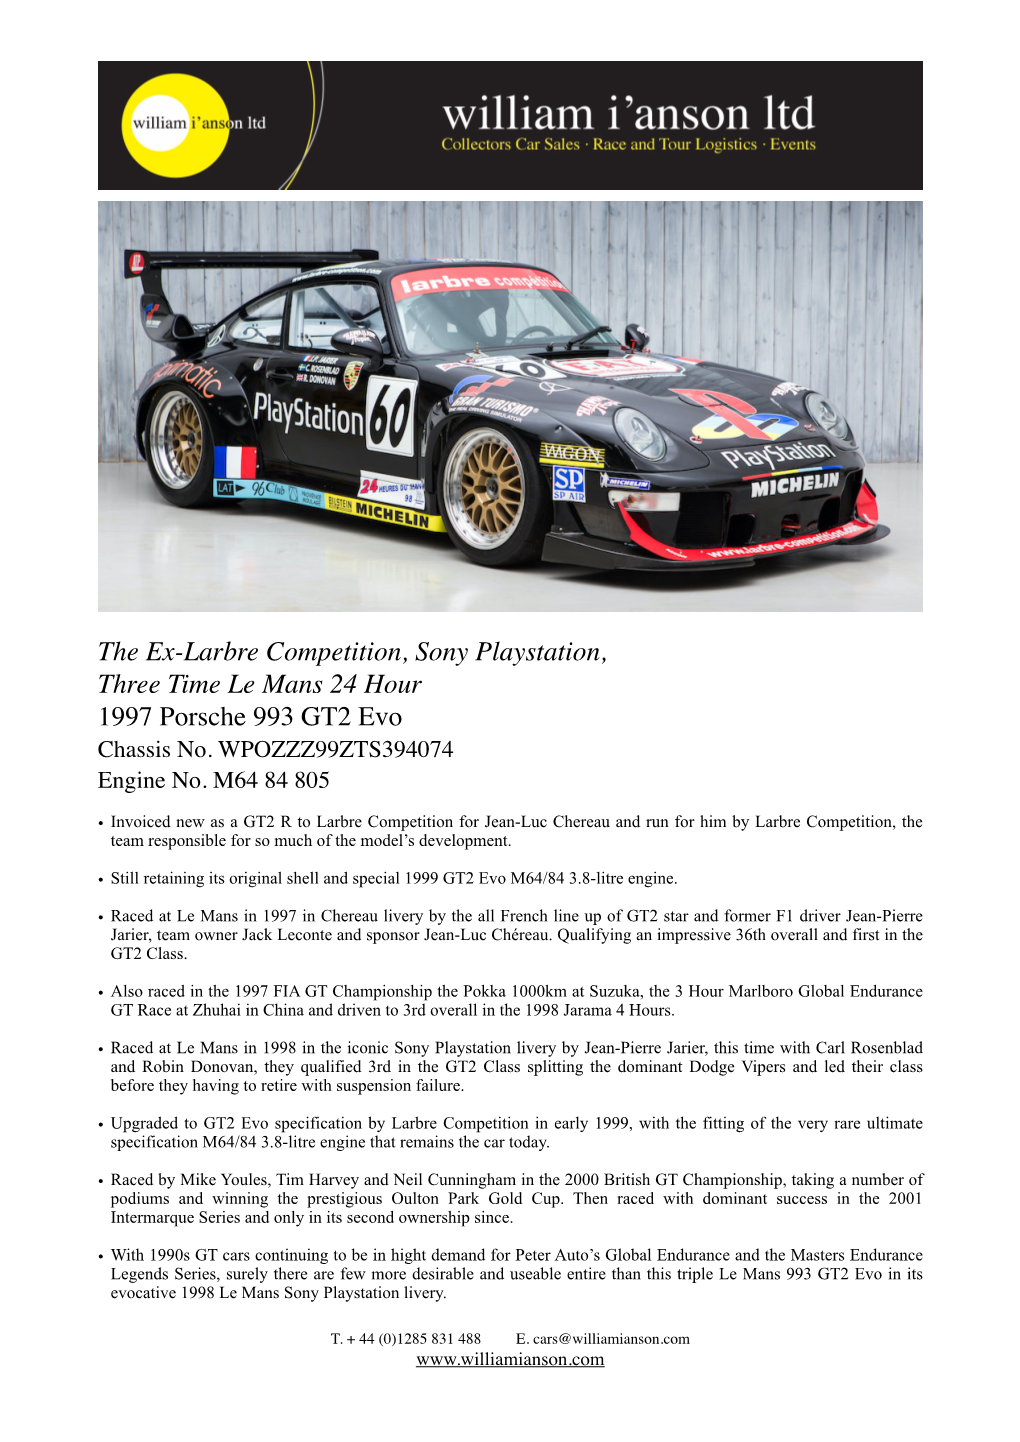 The Ex-Larbre Competition, Sony Playstation, Multiple Le Mans 1997 Porsche 993 GT2 Evo Copy